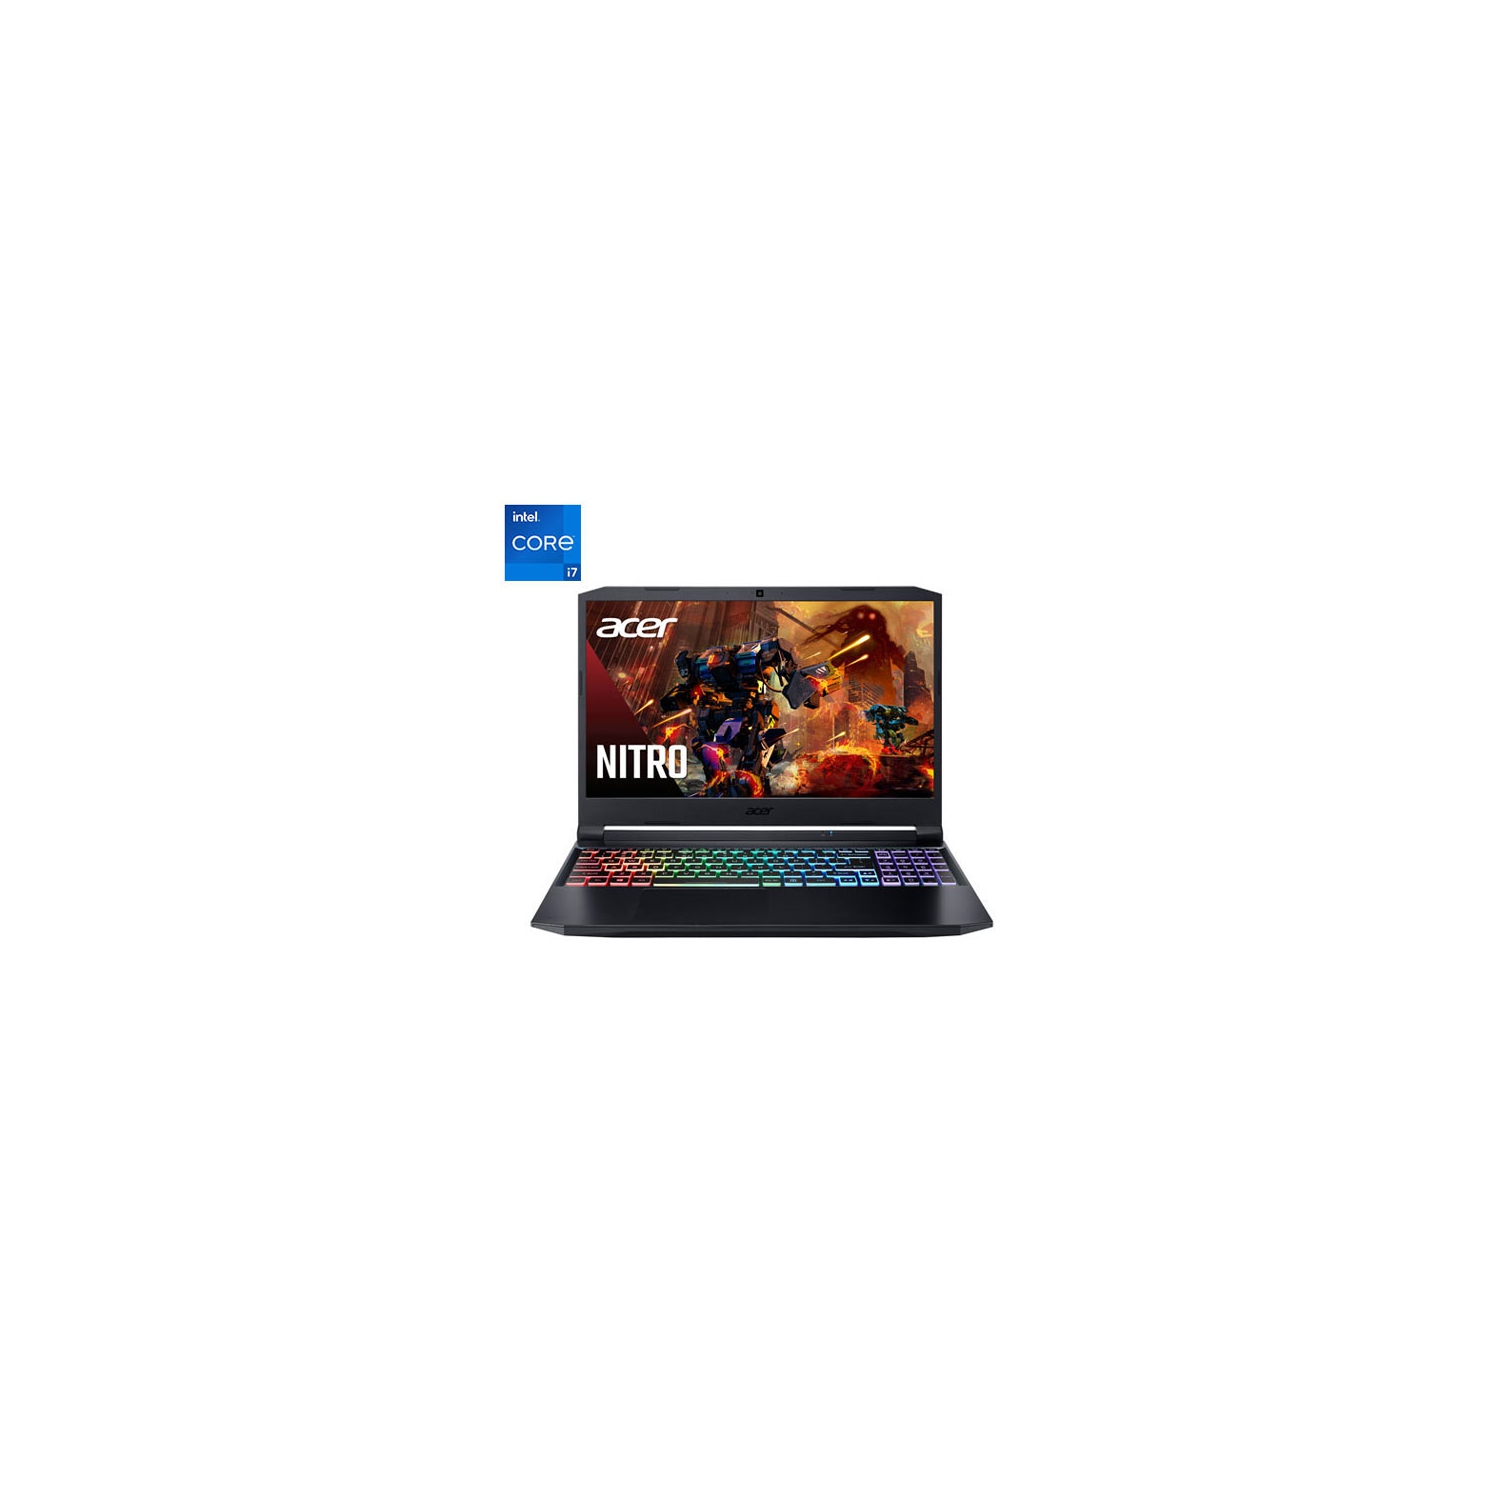 Acer Nitro 5 15.6" Gaming Laptop - Black (Intel Core i7-11800H/512GB SSD/16GB RAM/RTX 3050) - Open Box